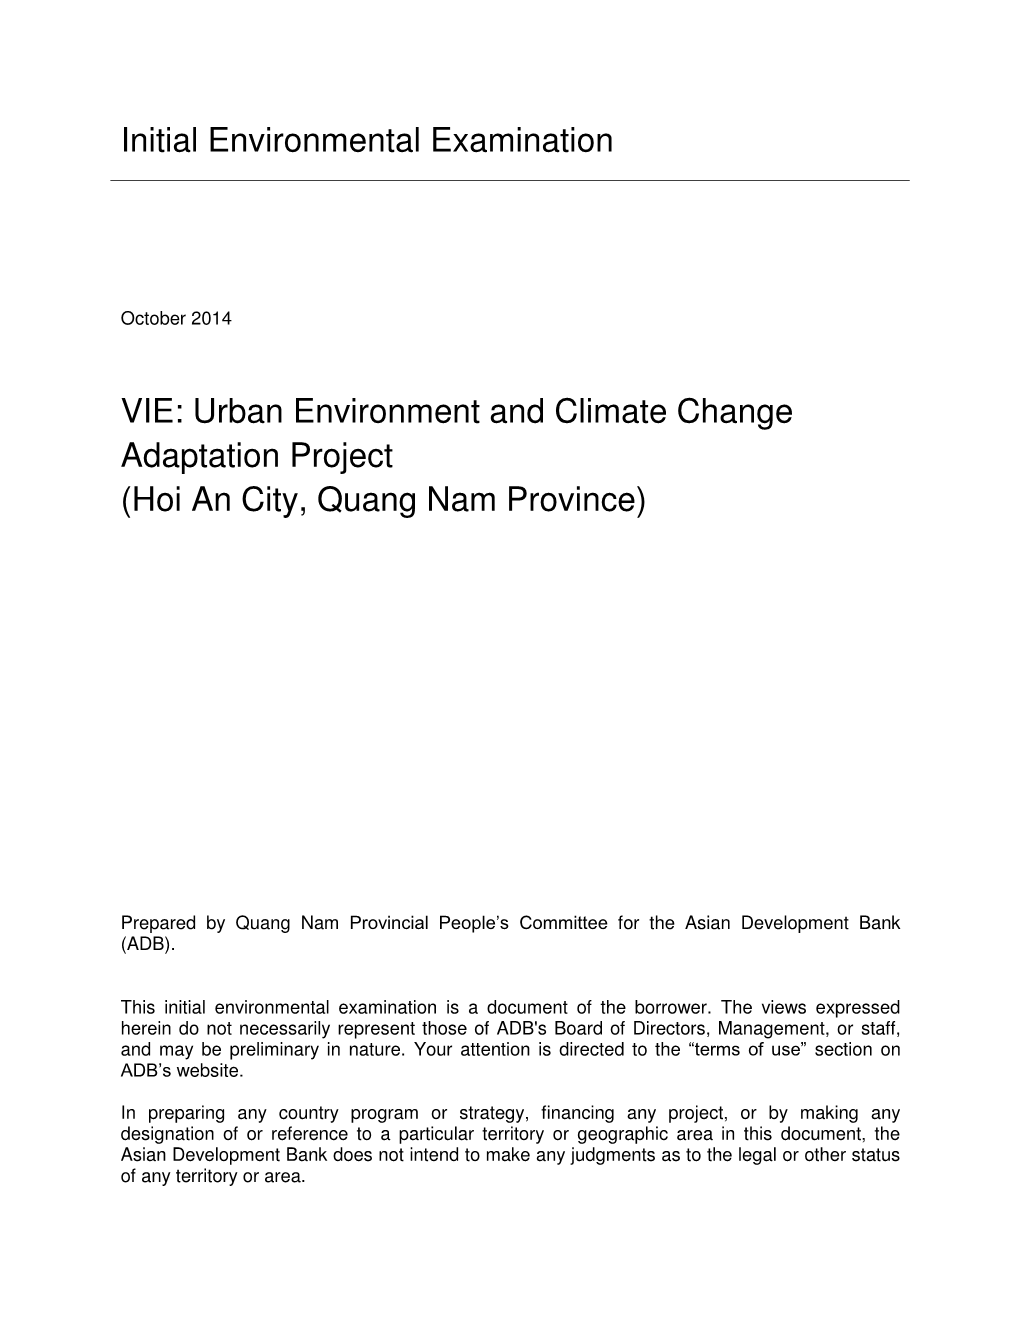 Hoi an City, Quang Nam Province Initial Environmental Examination